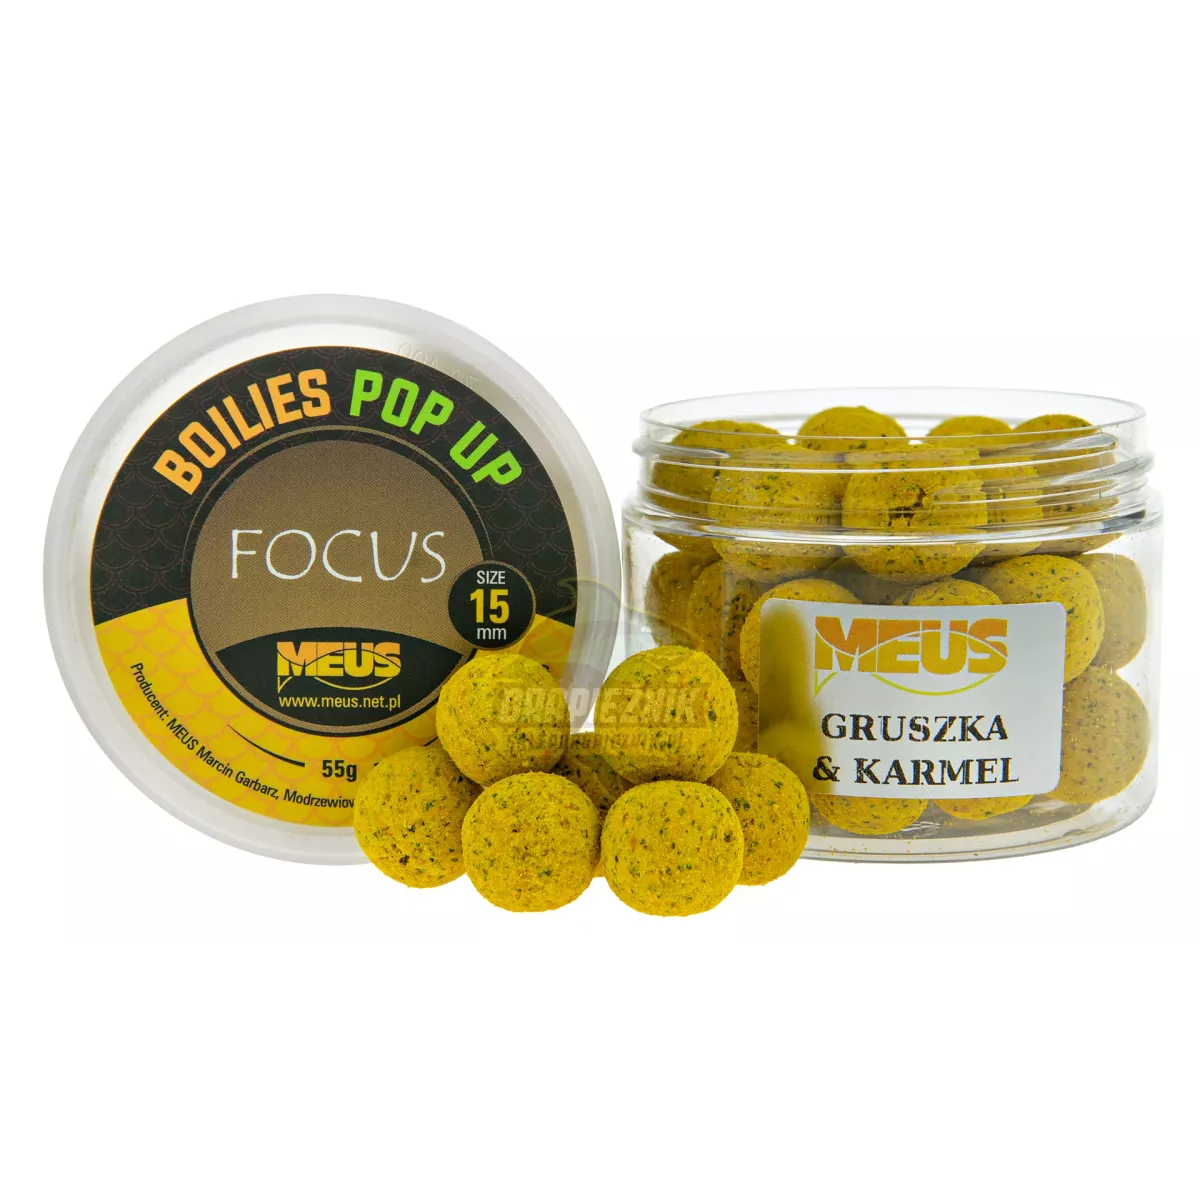 Kulki MEUS Focus POP-UP na włos 15mm - Gruszka & Karmel